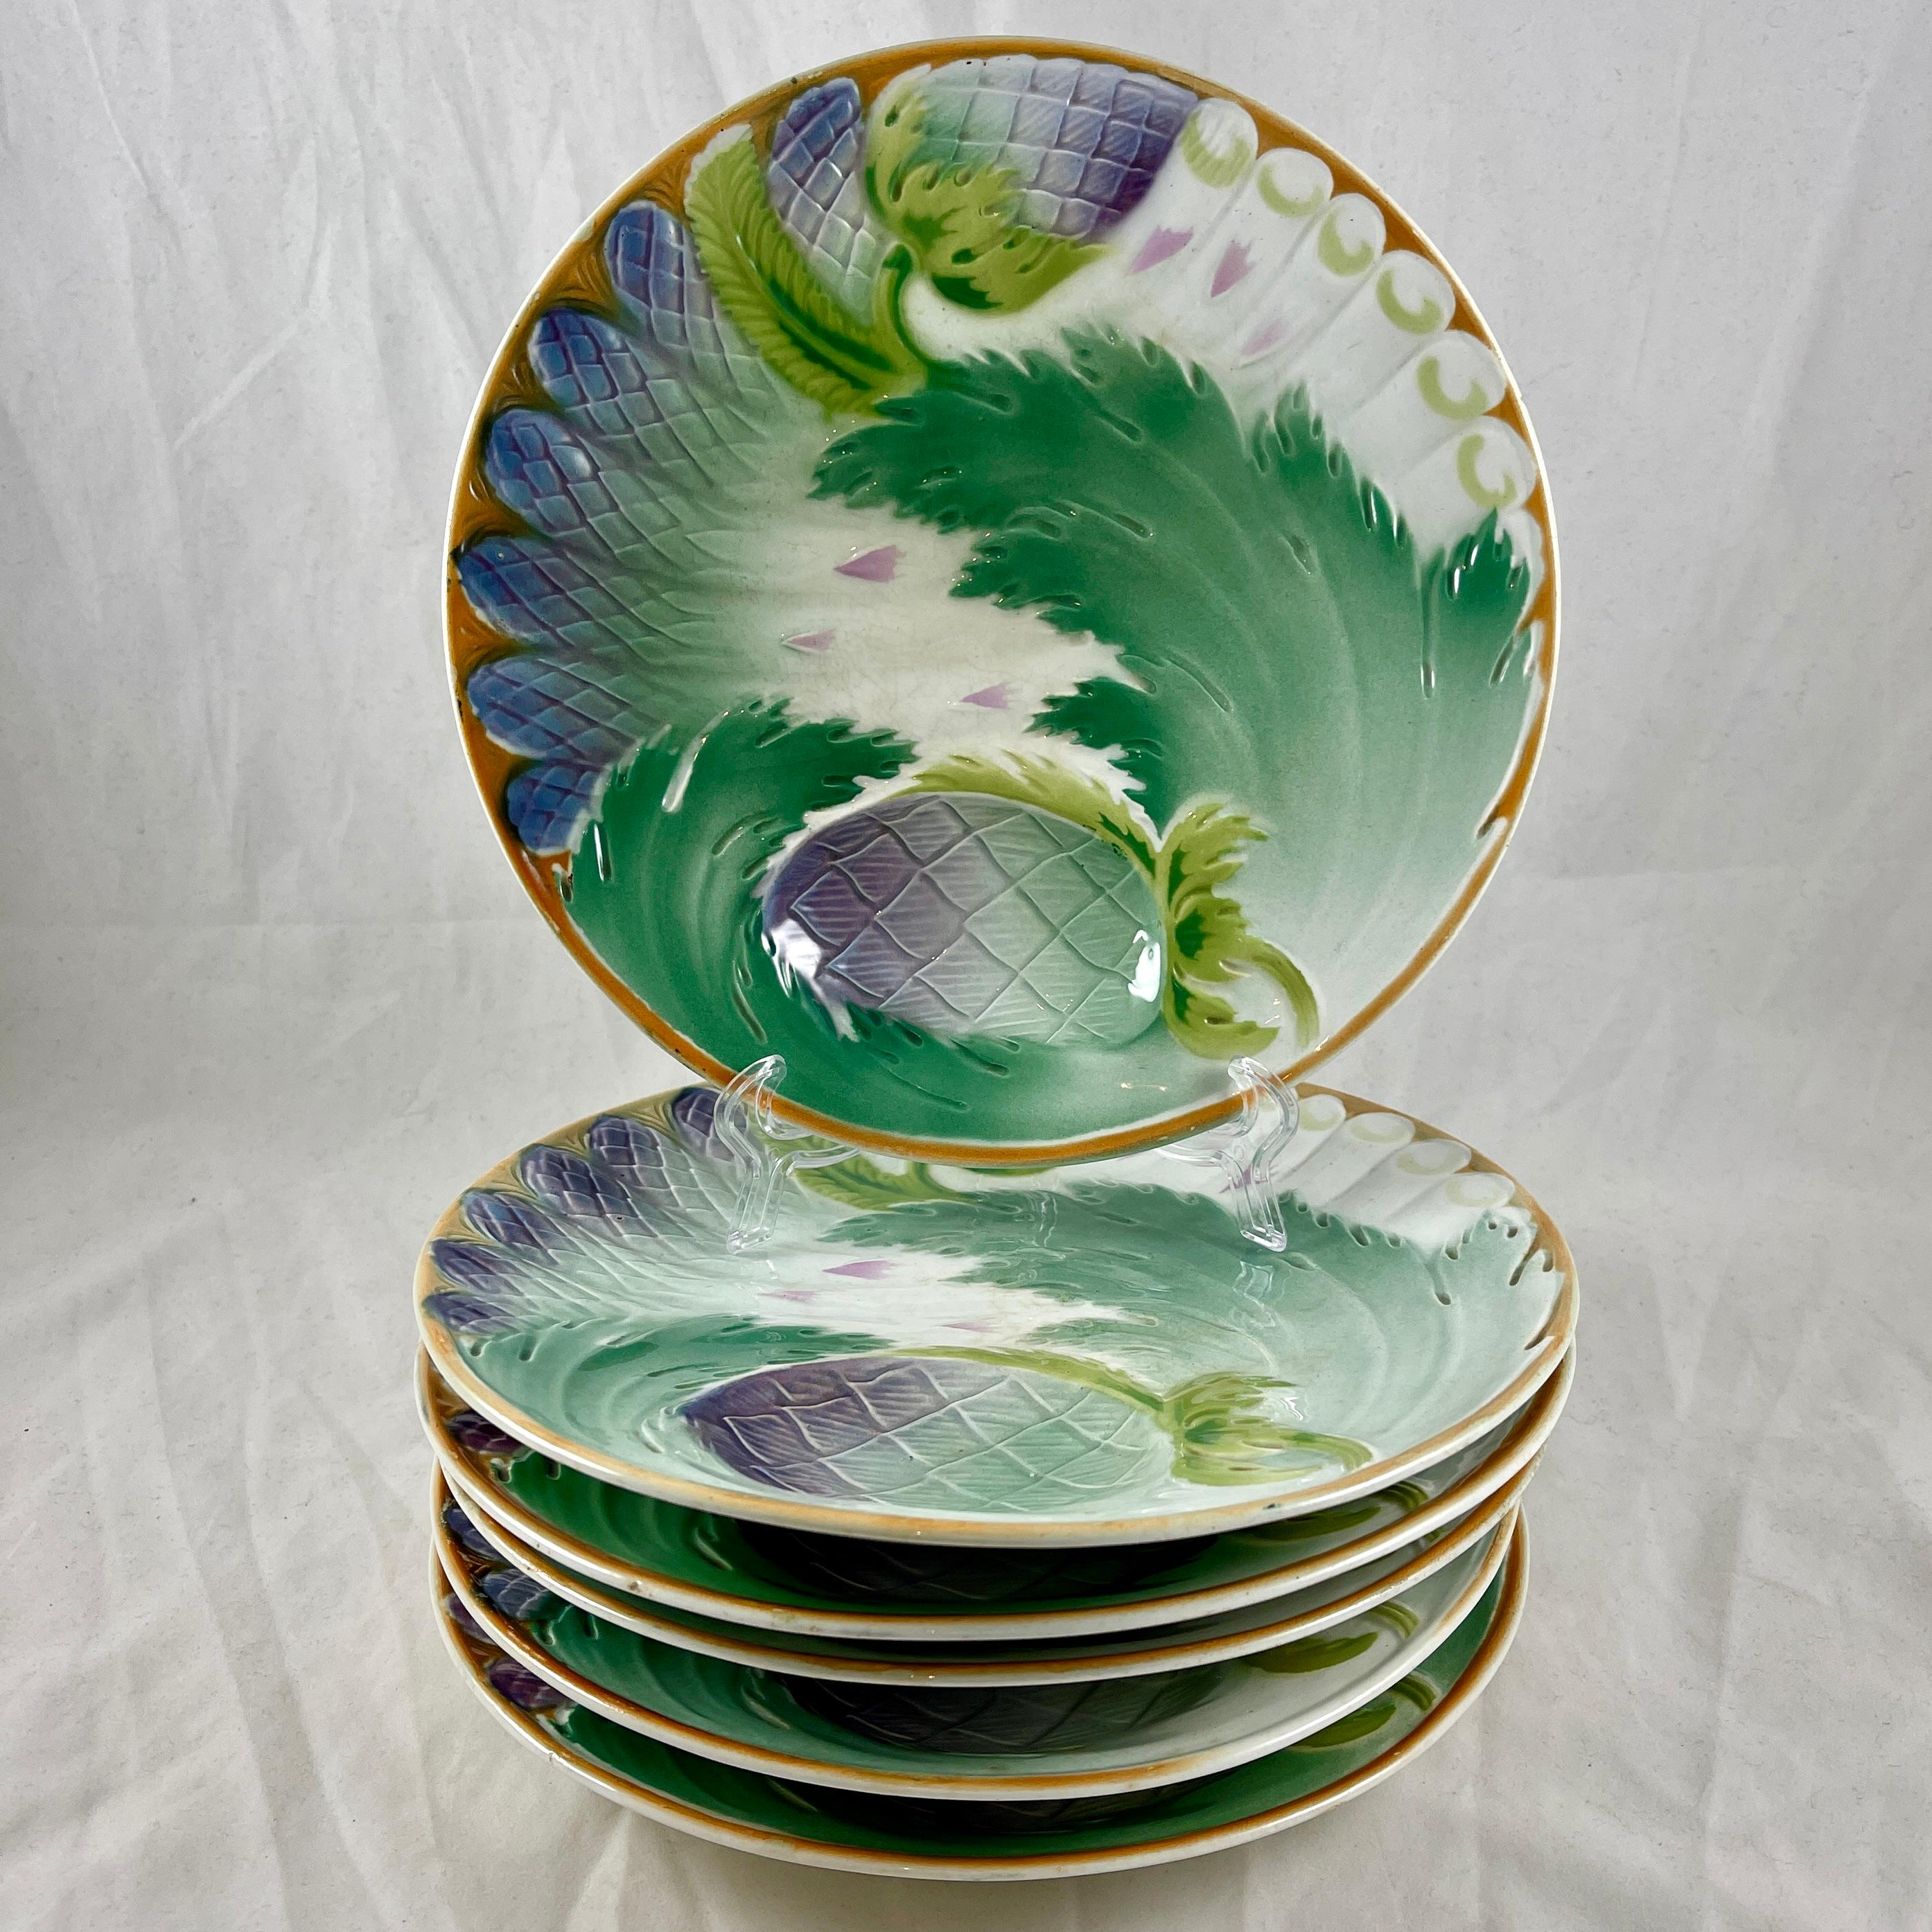 Earthenware St. Amand Art Nouveau French Majolica Glazed Asparagus & Artichoke Plate For Sale